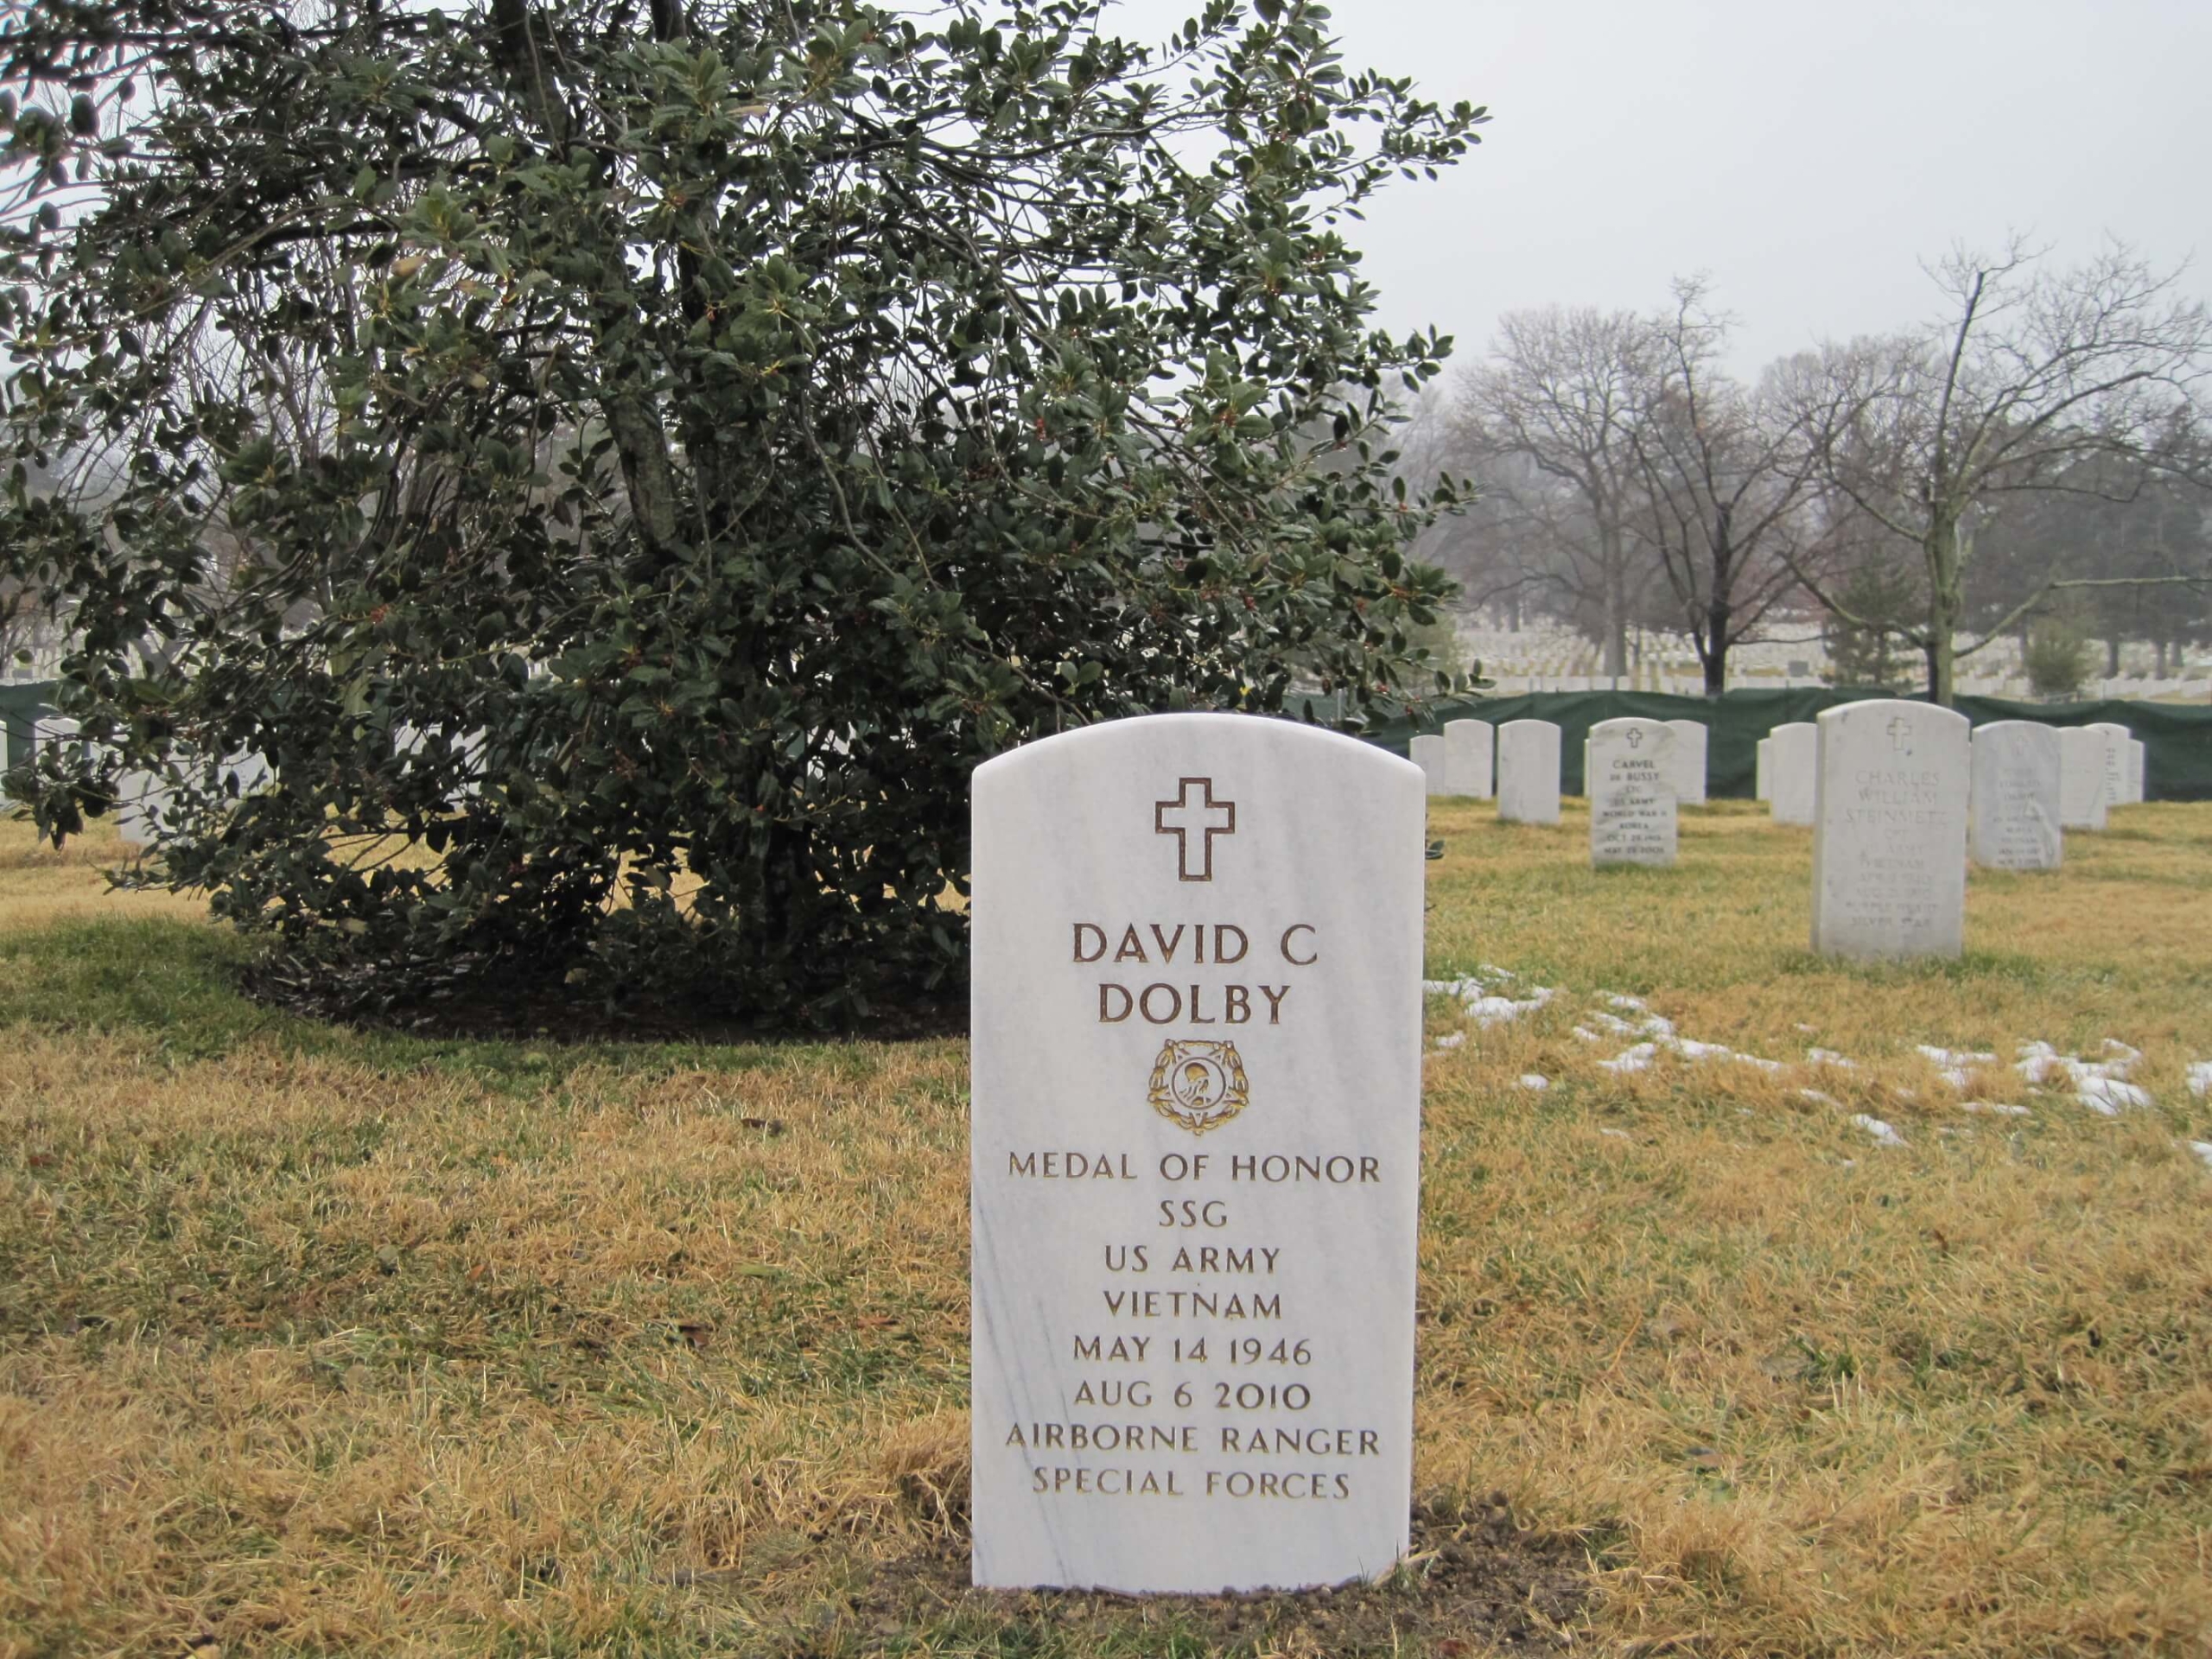 dcdolby-gravesite-photo-by-eileen-horan-february-2011-002